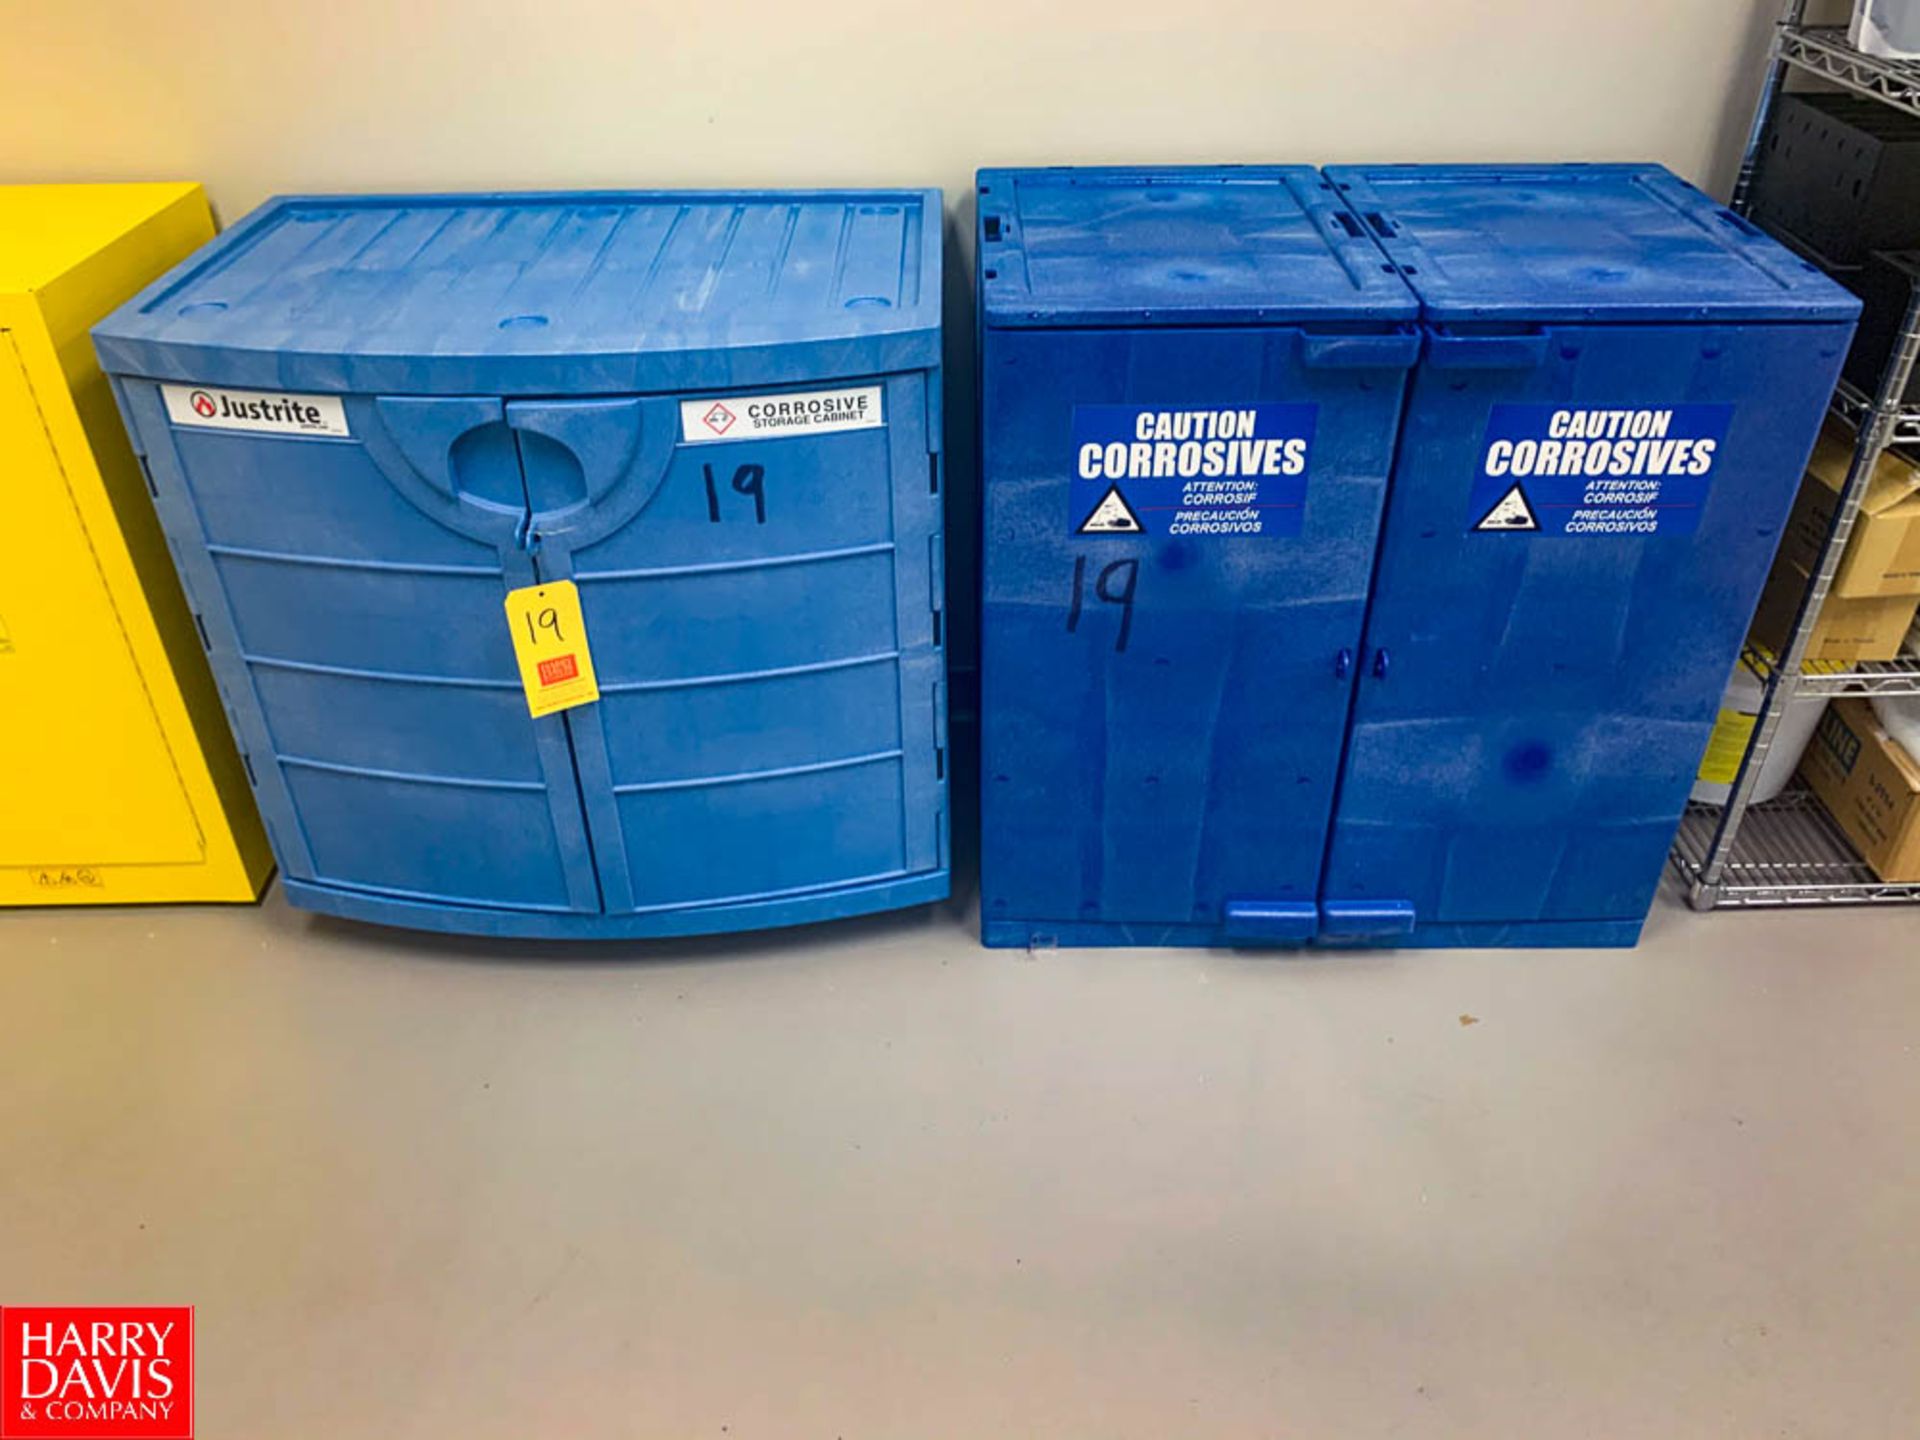 Justrite Corrosive Storage Cabinet Rigging: $25 - Image 2 of 2